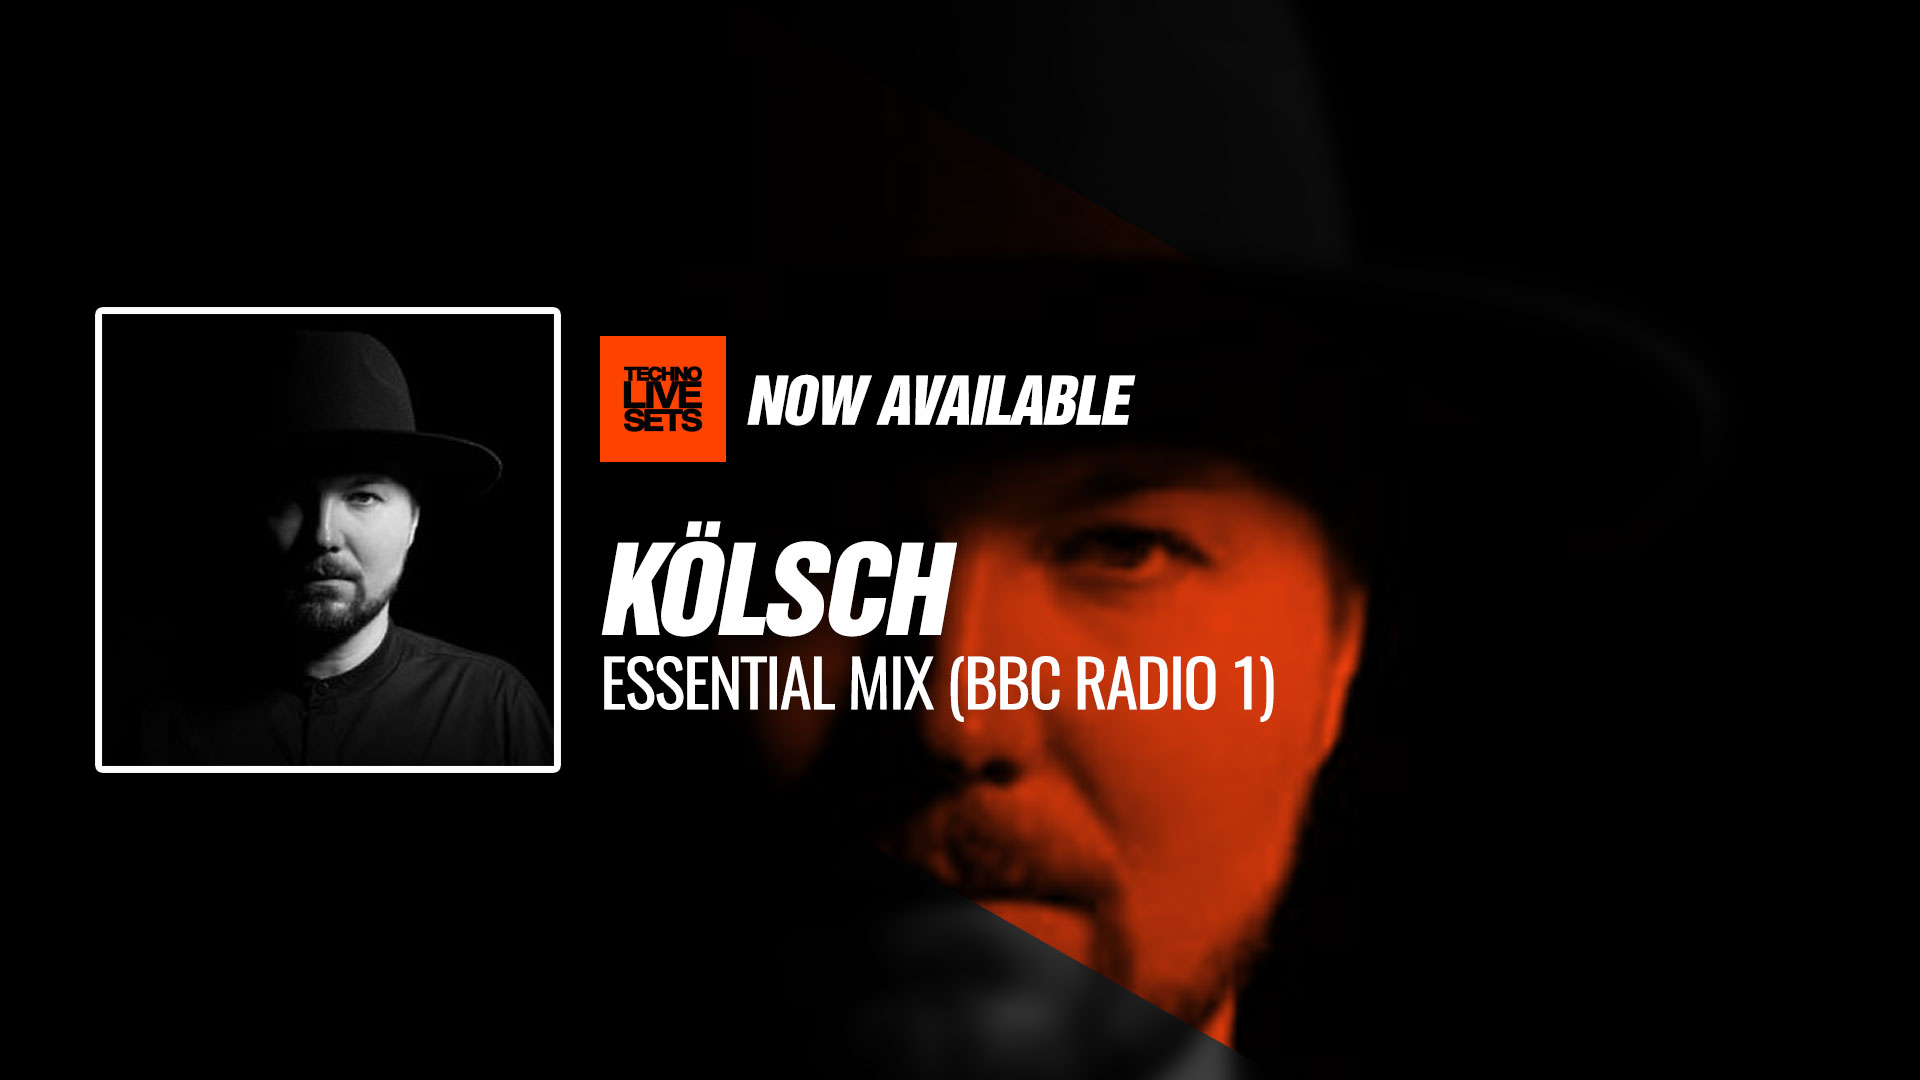 indre social valgfri Kölsch 2019 Essential Mix (BBC Radio 1) 22-12-2018